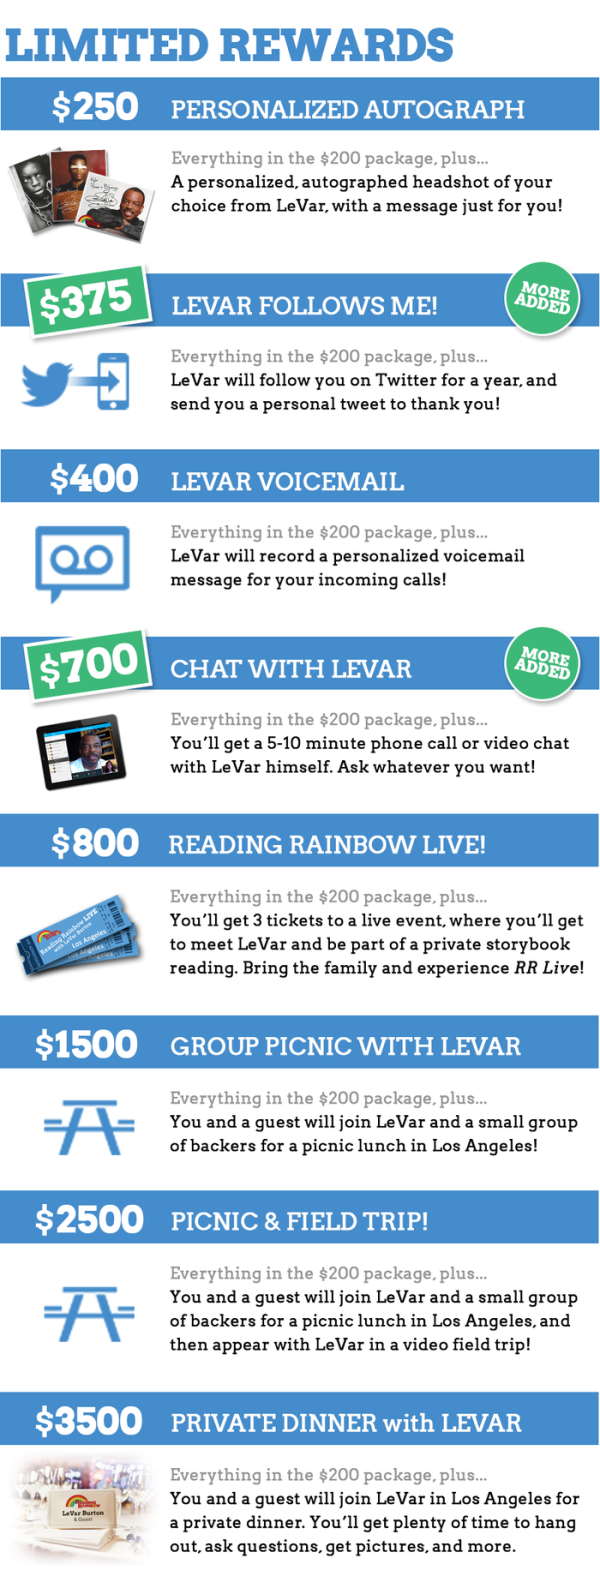 Reading Rainbow's Kickstarter Project Limited rewards